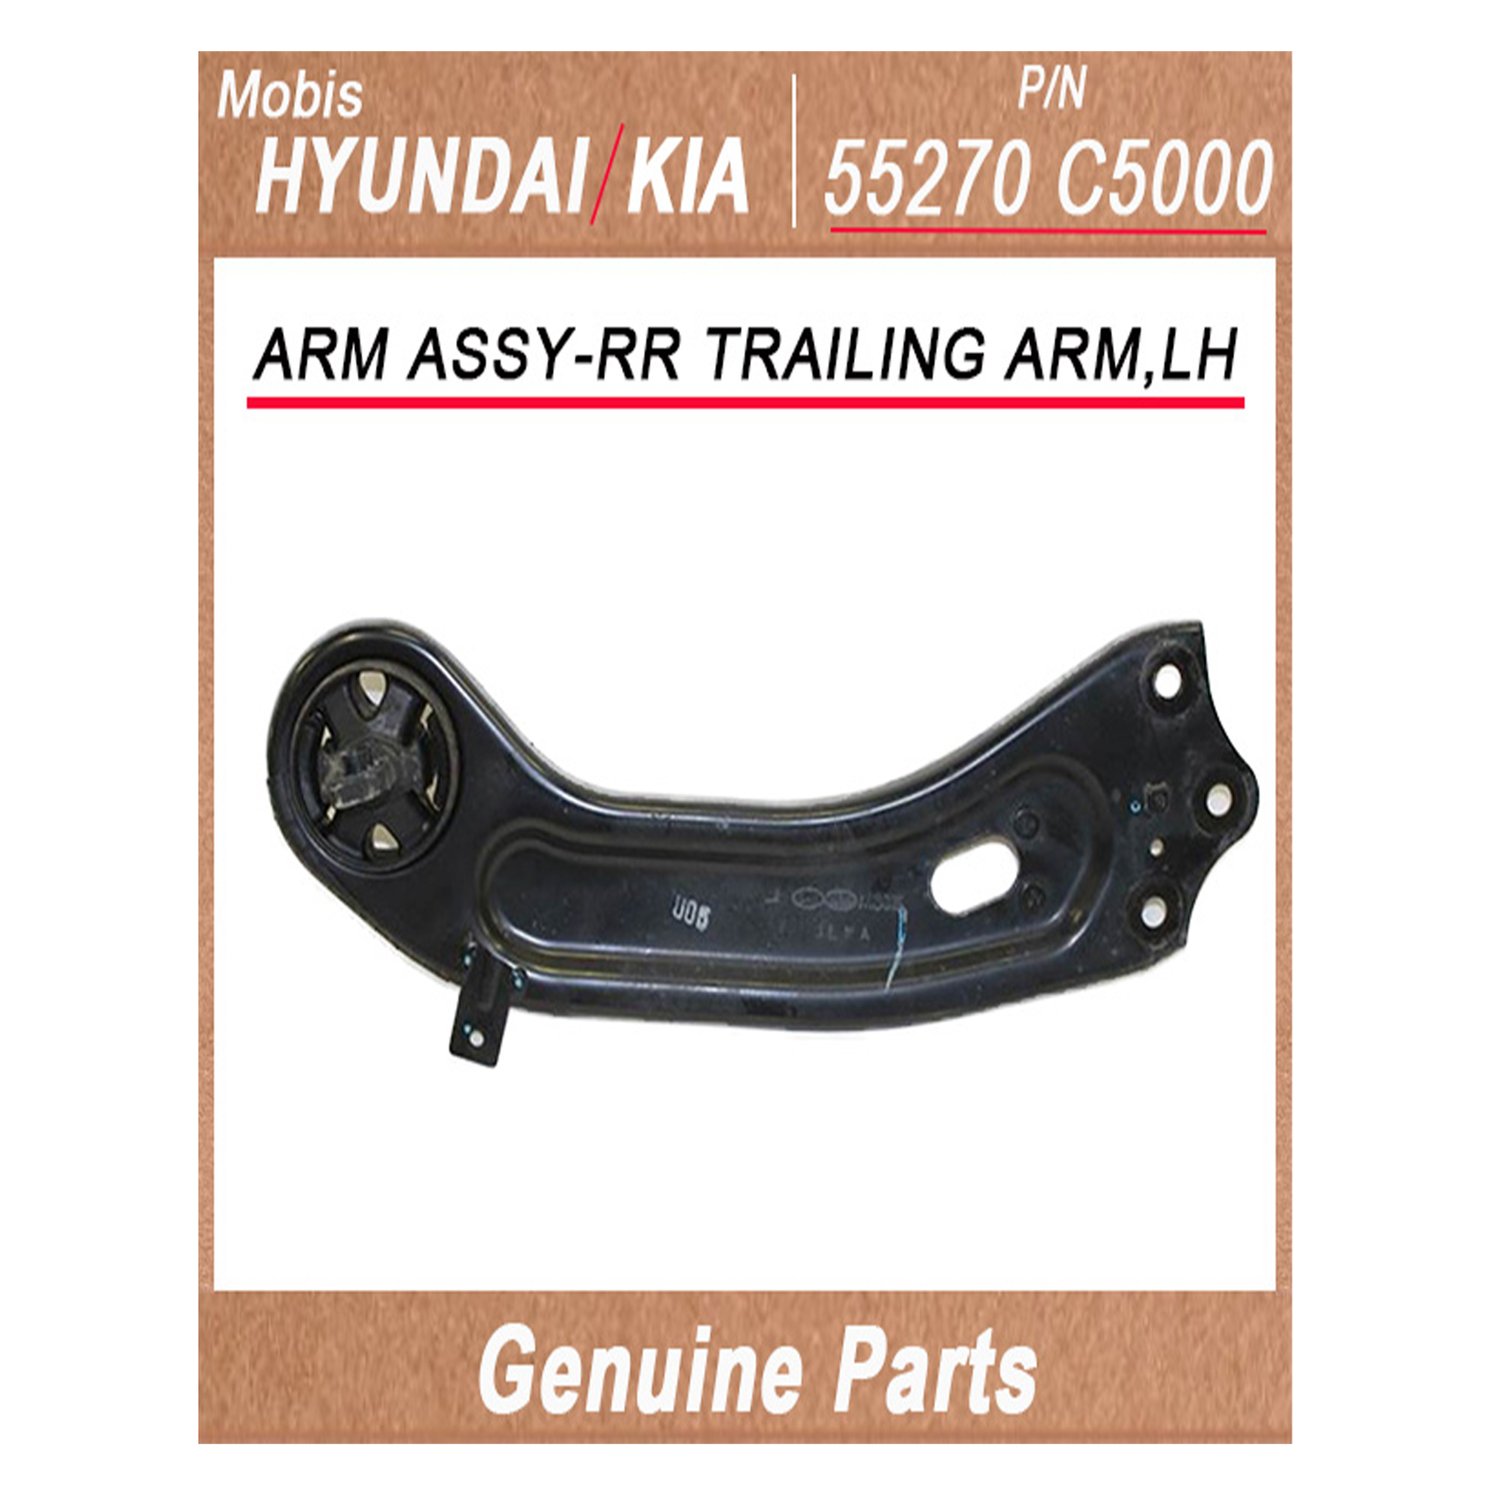 55270C5000 _ ARM ASSY_RR TRAILING ARM_LH _ Genuine Korean Automotive Spare Parts _ Hyundai Kia _Mobi